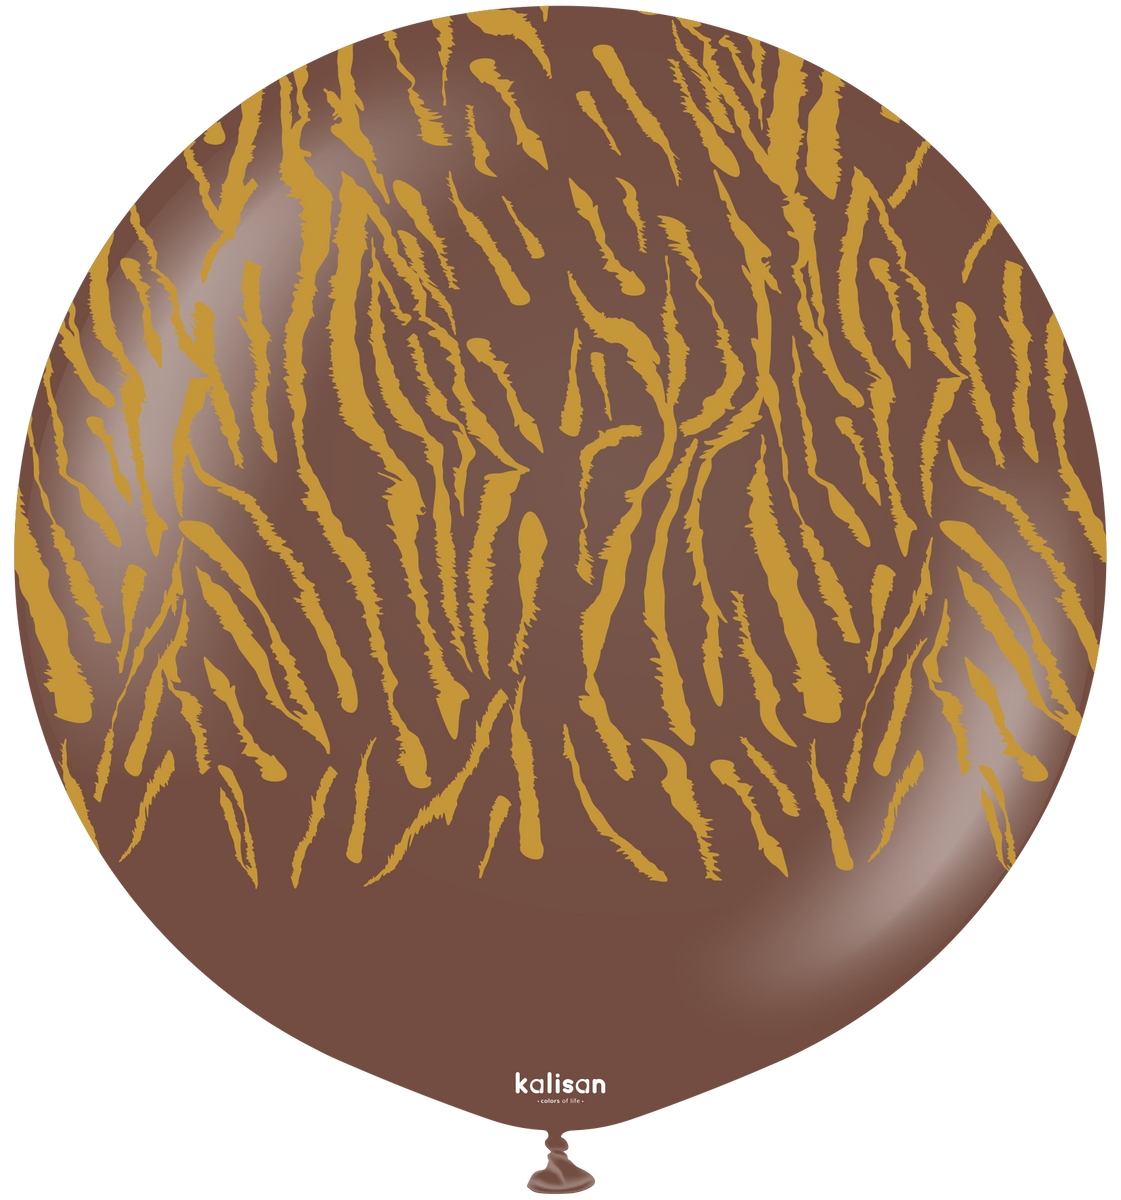 Safari Tiger Chocolate Brown With Gold Print 24″ Latex Balloon